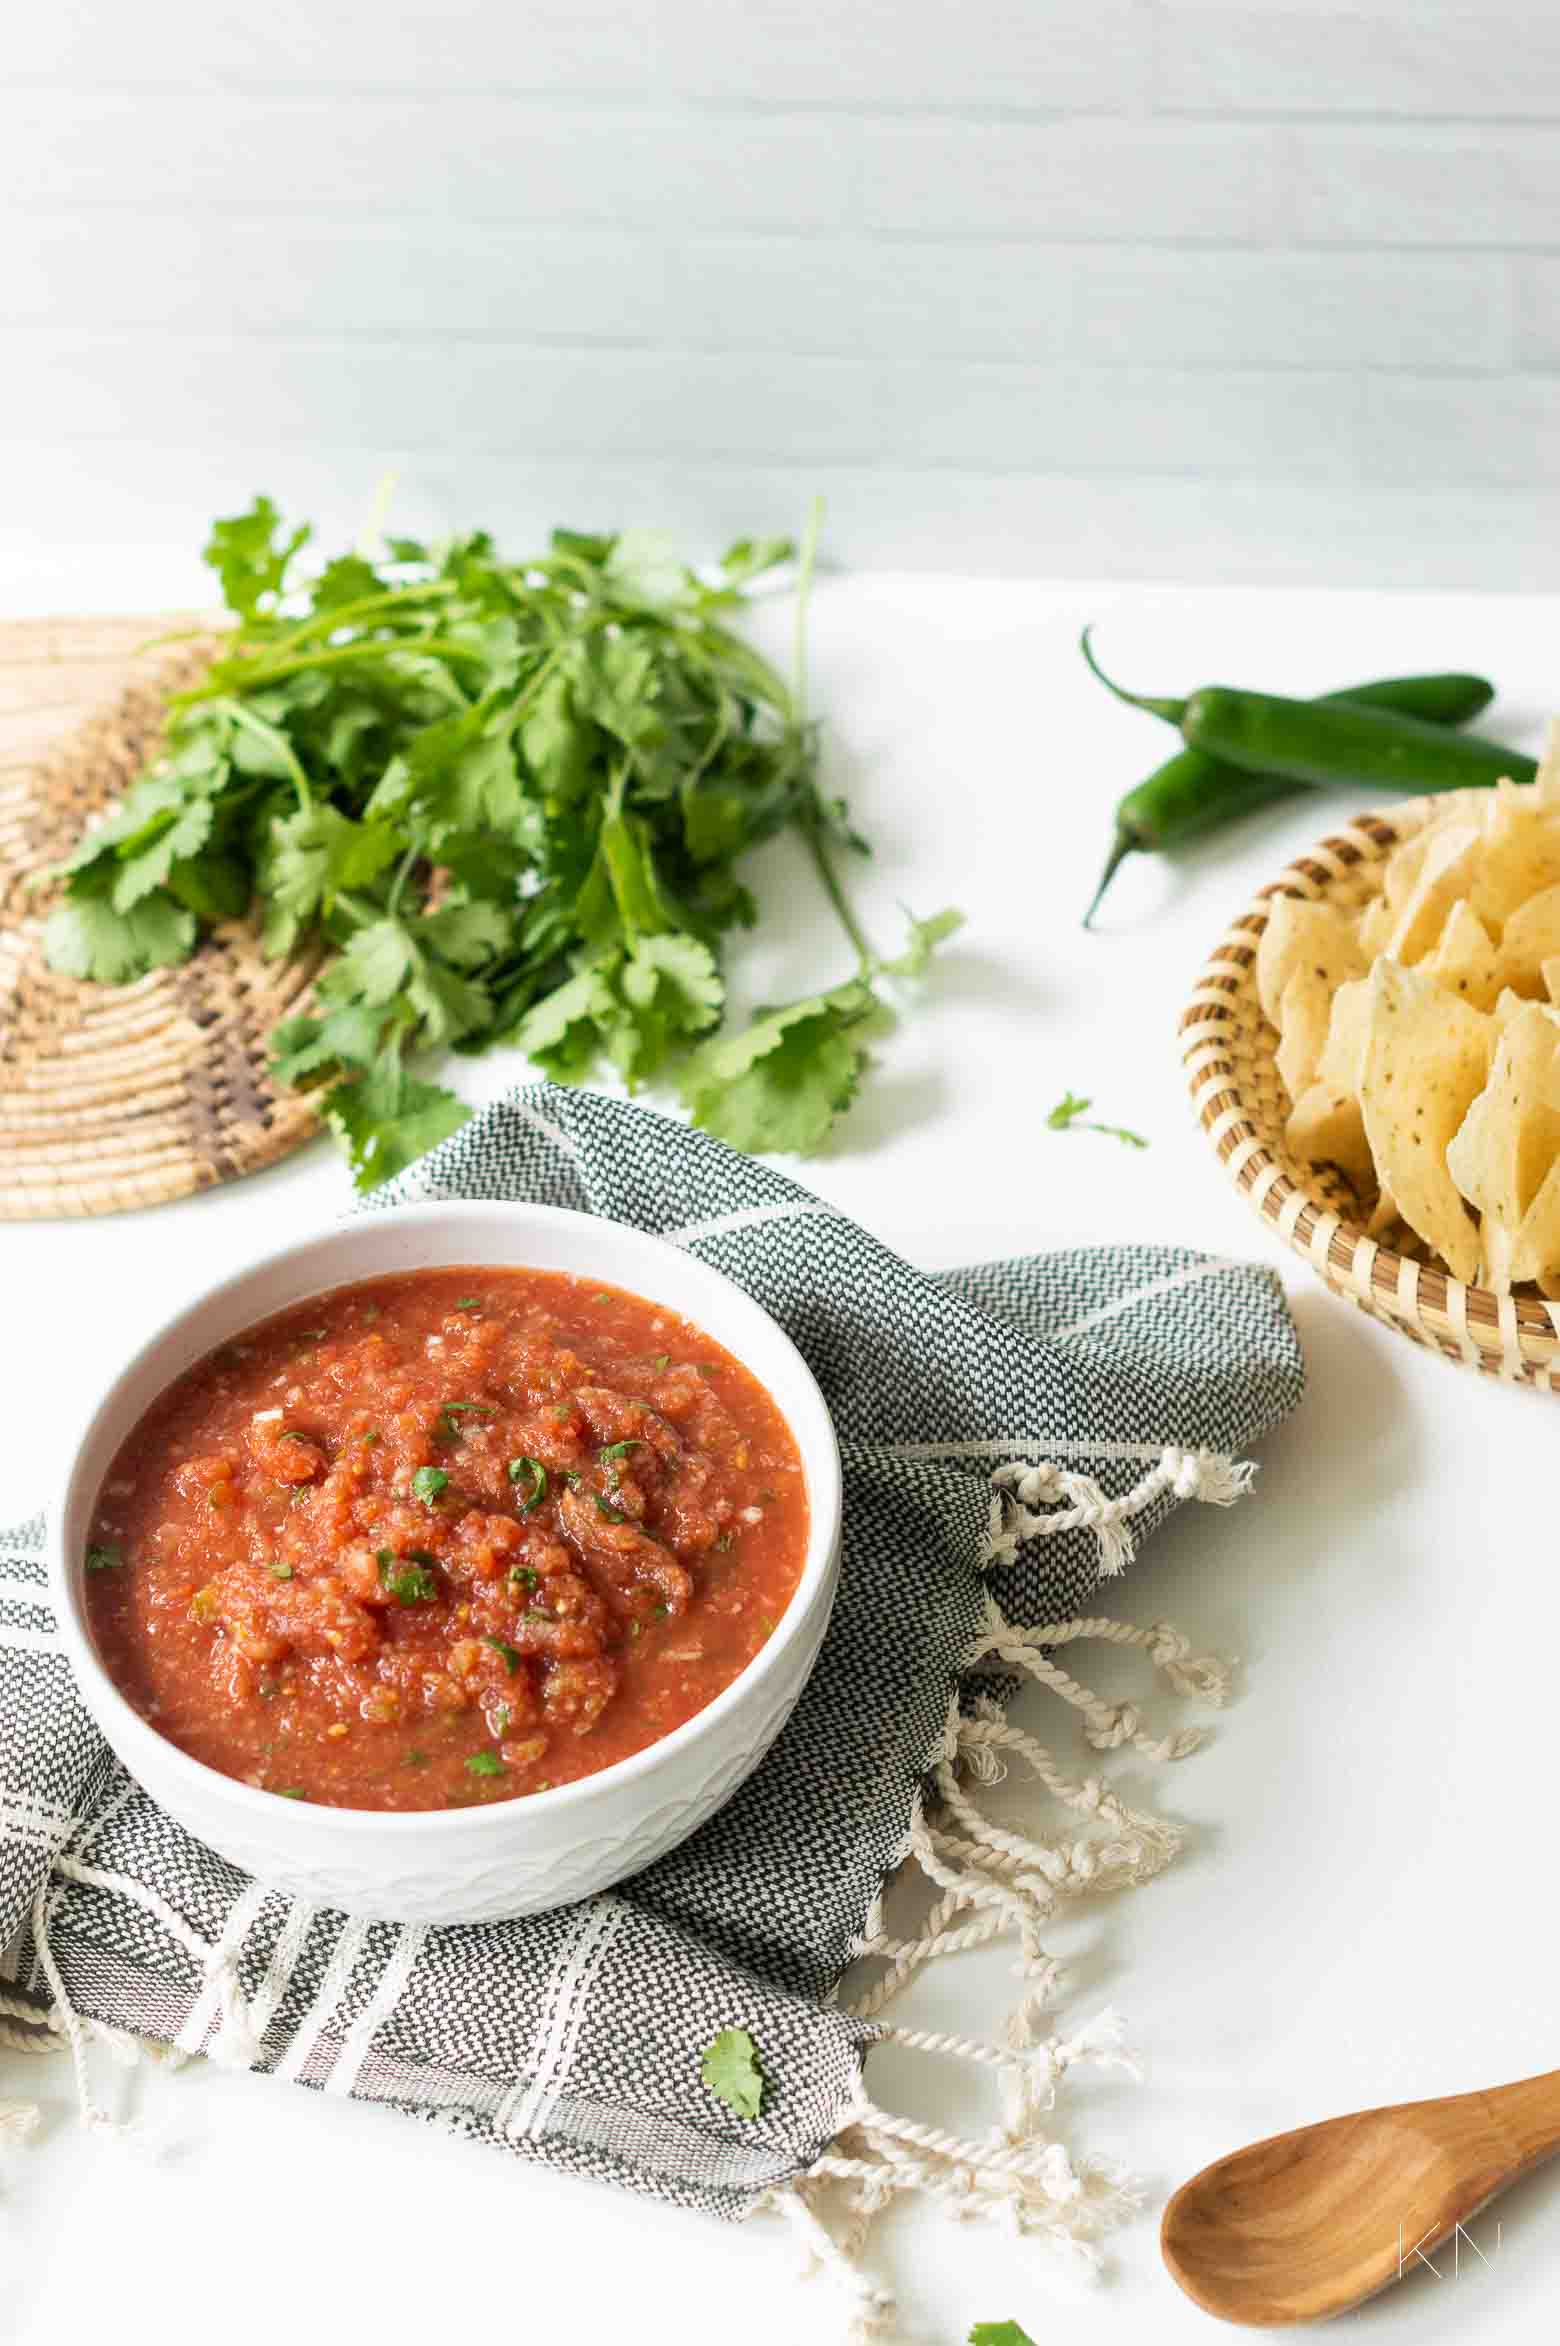 Homemade Salsa Ingredients & Recipe